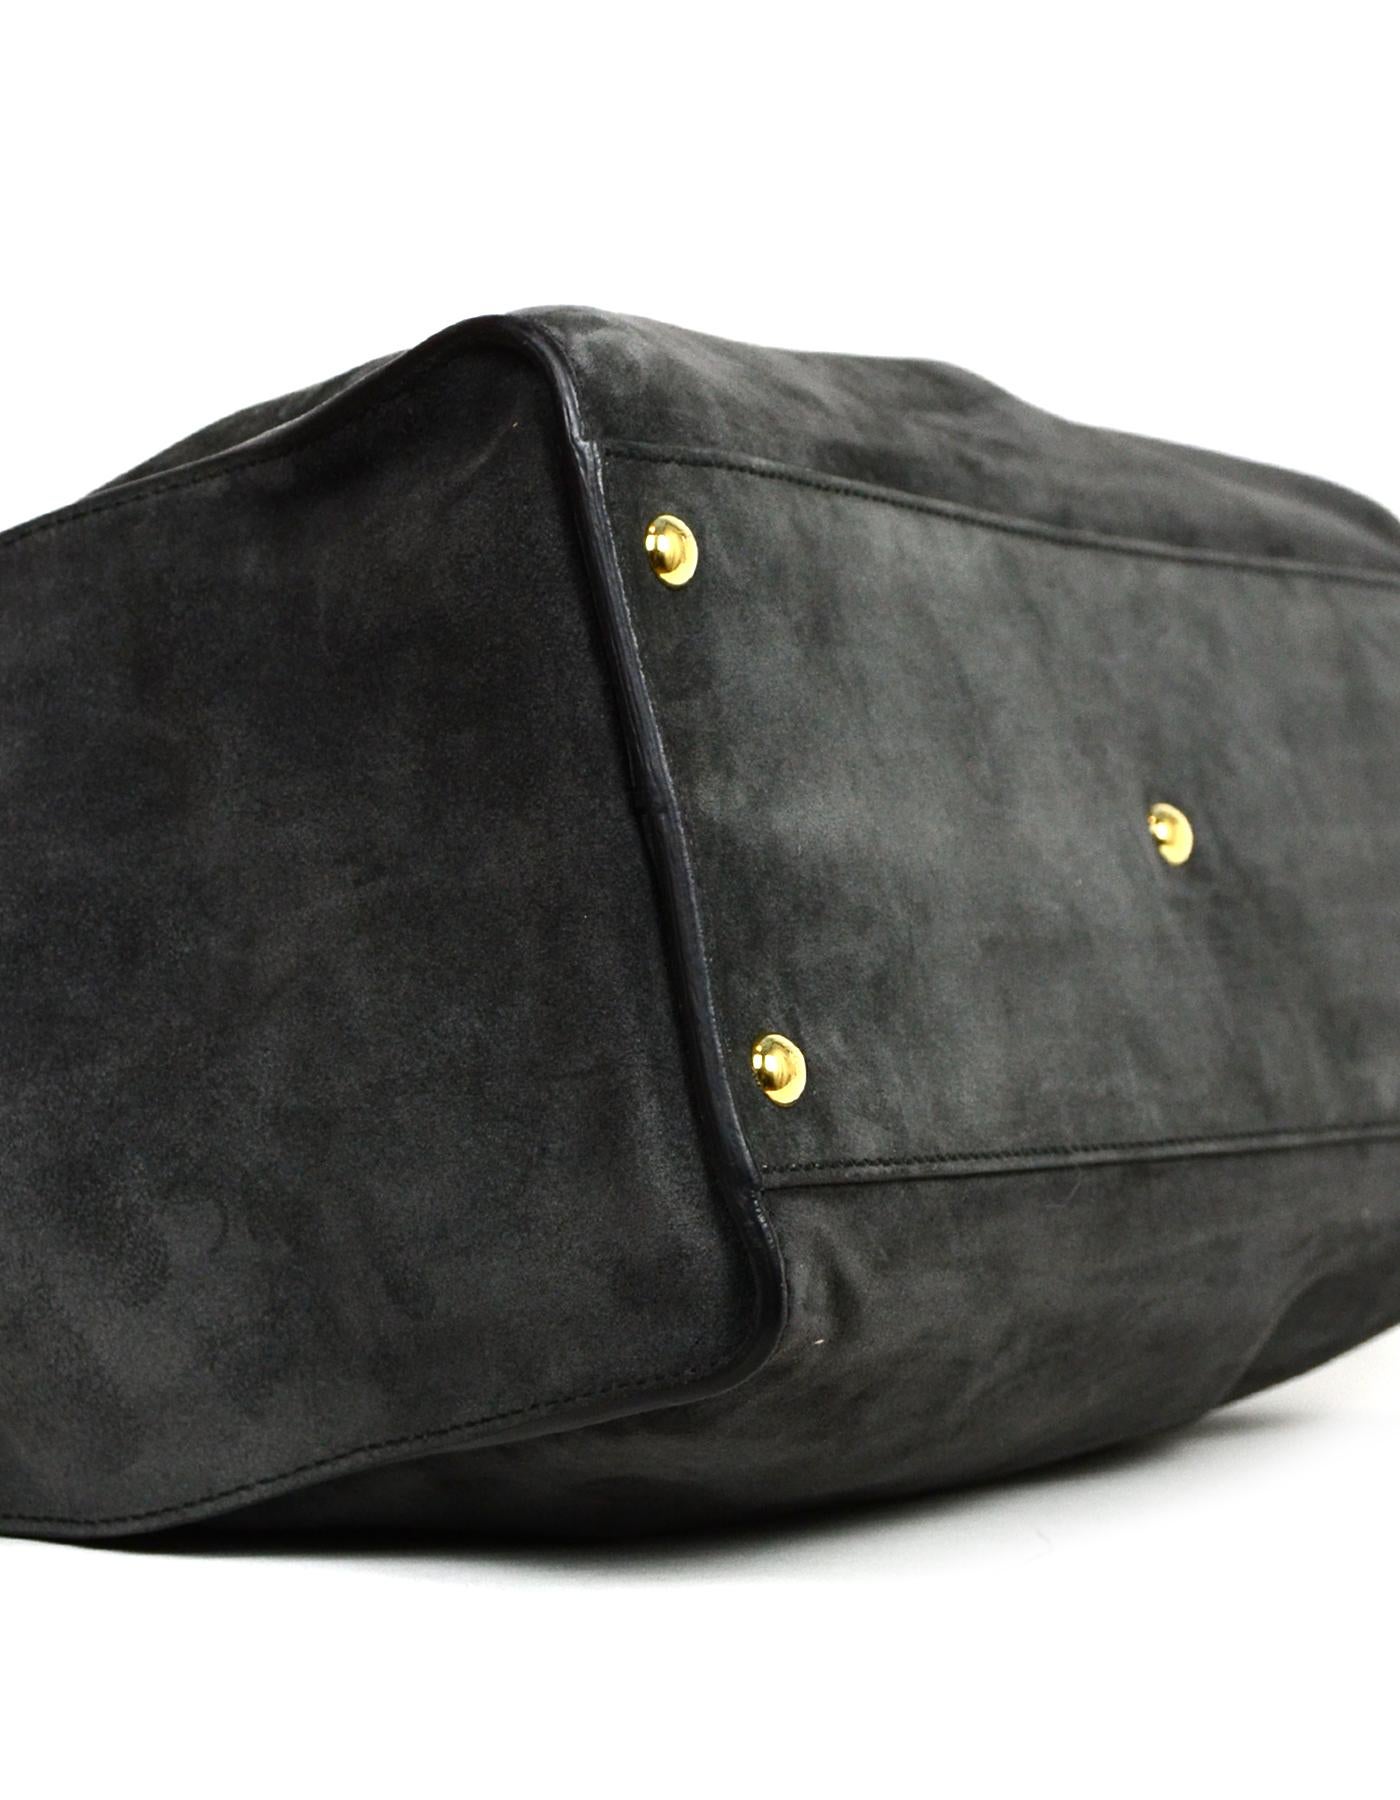 Women's Fendi Grey Suede Large Peekaboo Bag w. Leopard Print Calf Hair Interior rt $4950